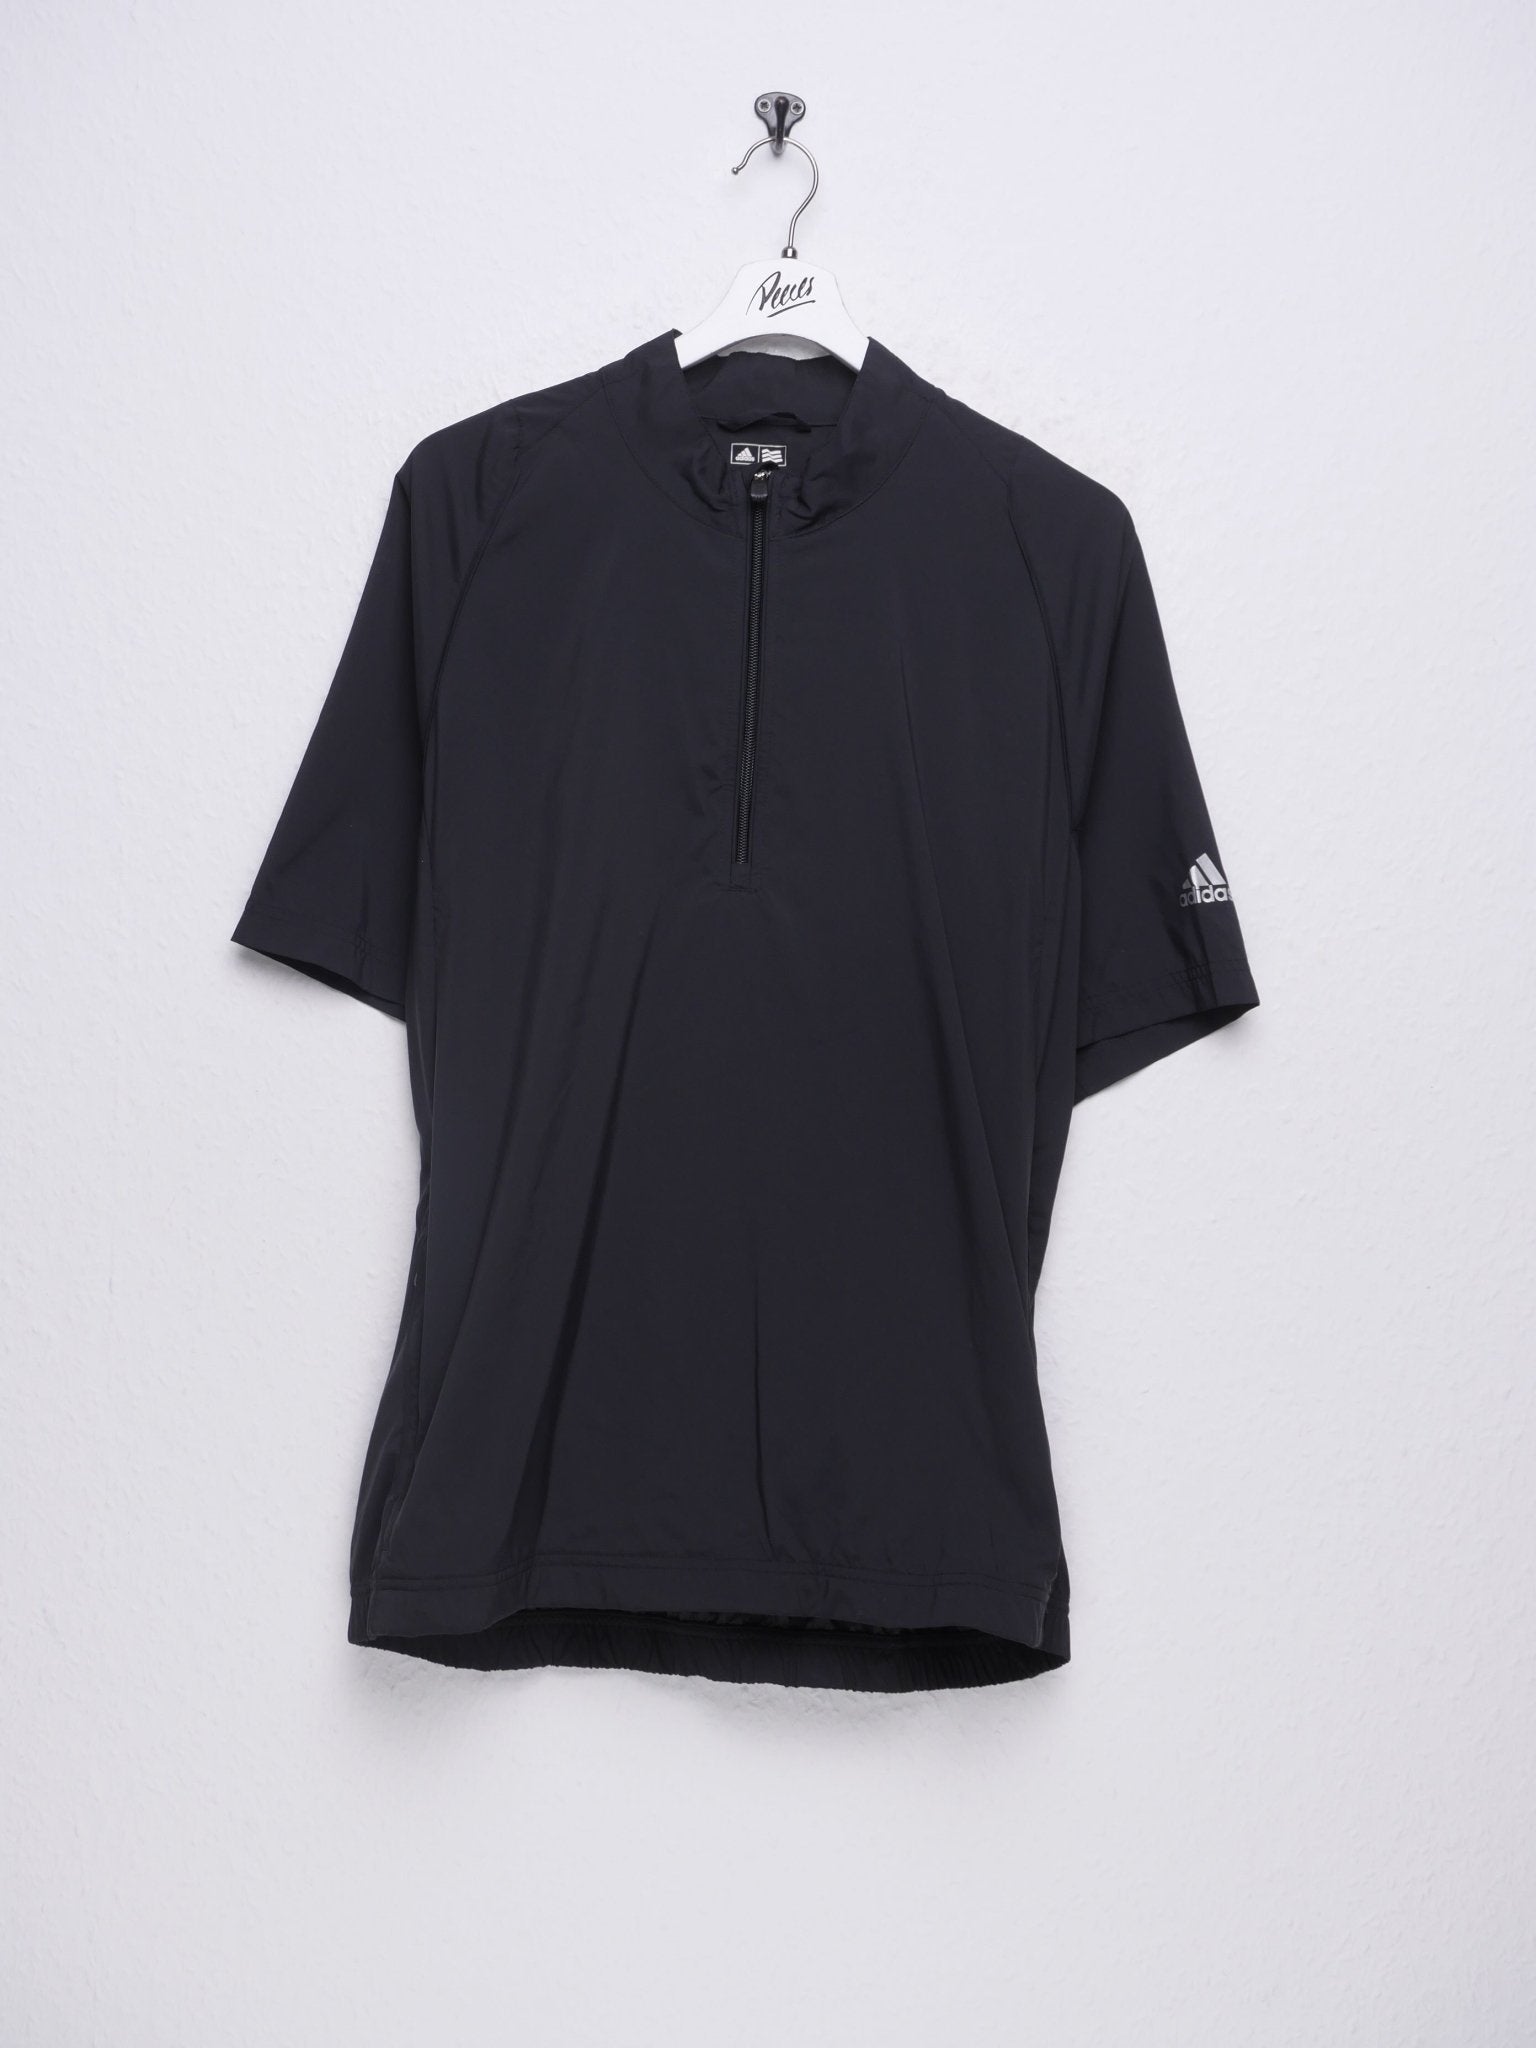 Adidas printed Logo Vintage Half Zip Jersey Shirt - Peeces